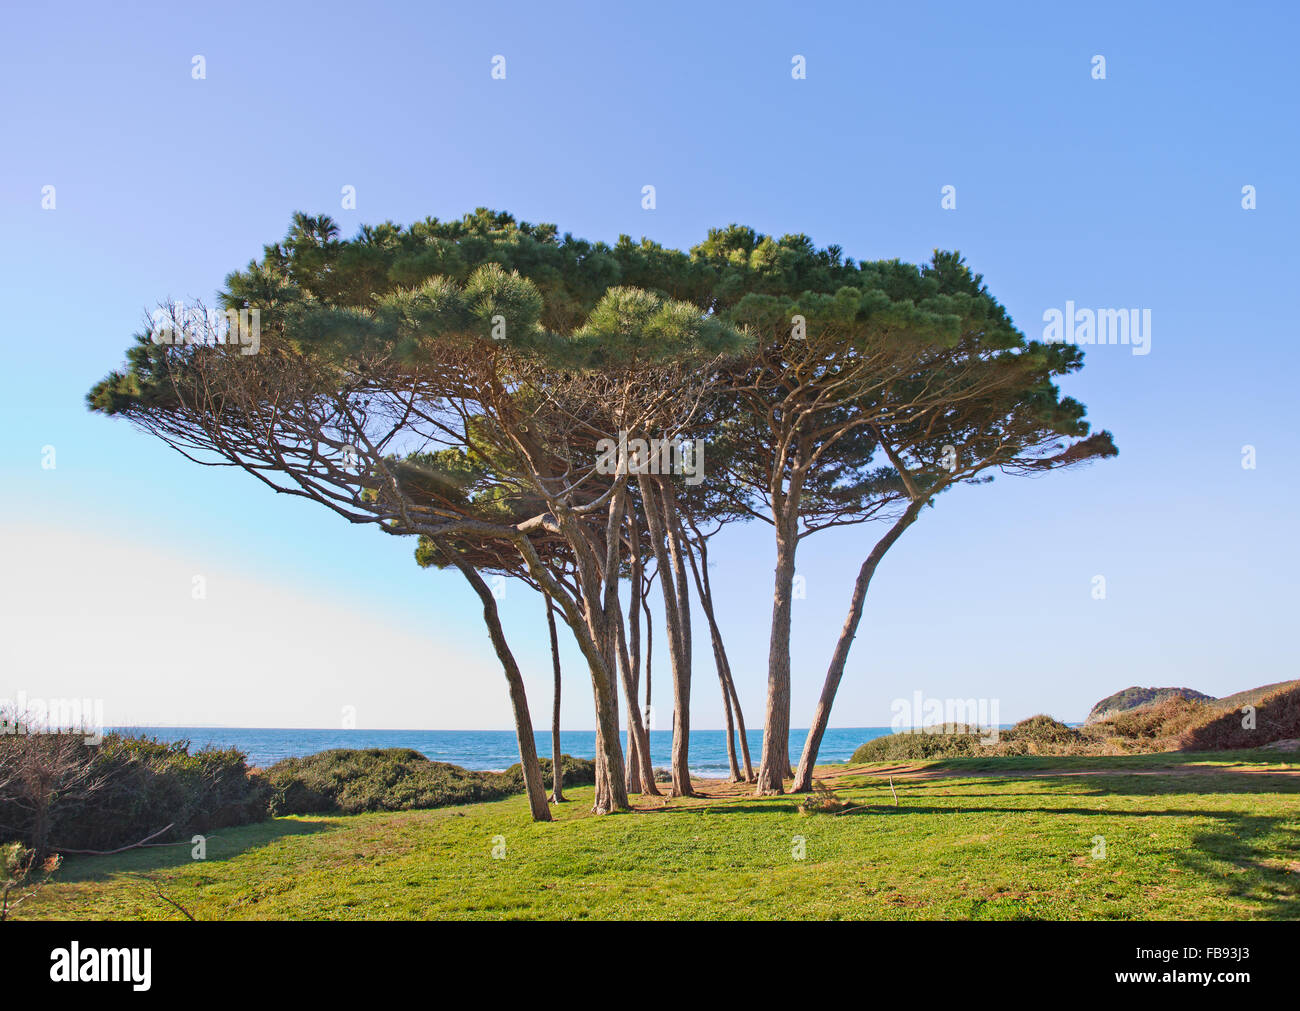 Maritime Pine Tree Gruppe in der Nähe von Meer und Strand. Baratti Piombino, Toskana, Italien. Stockfoto